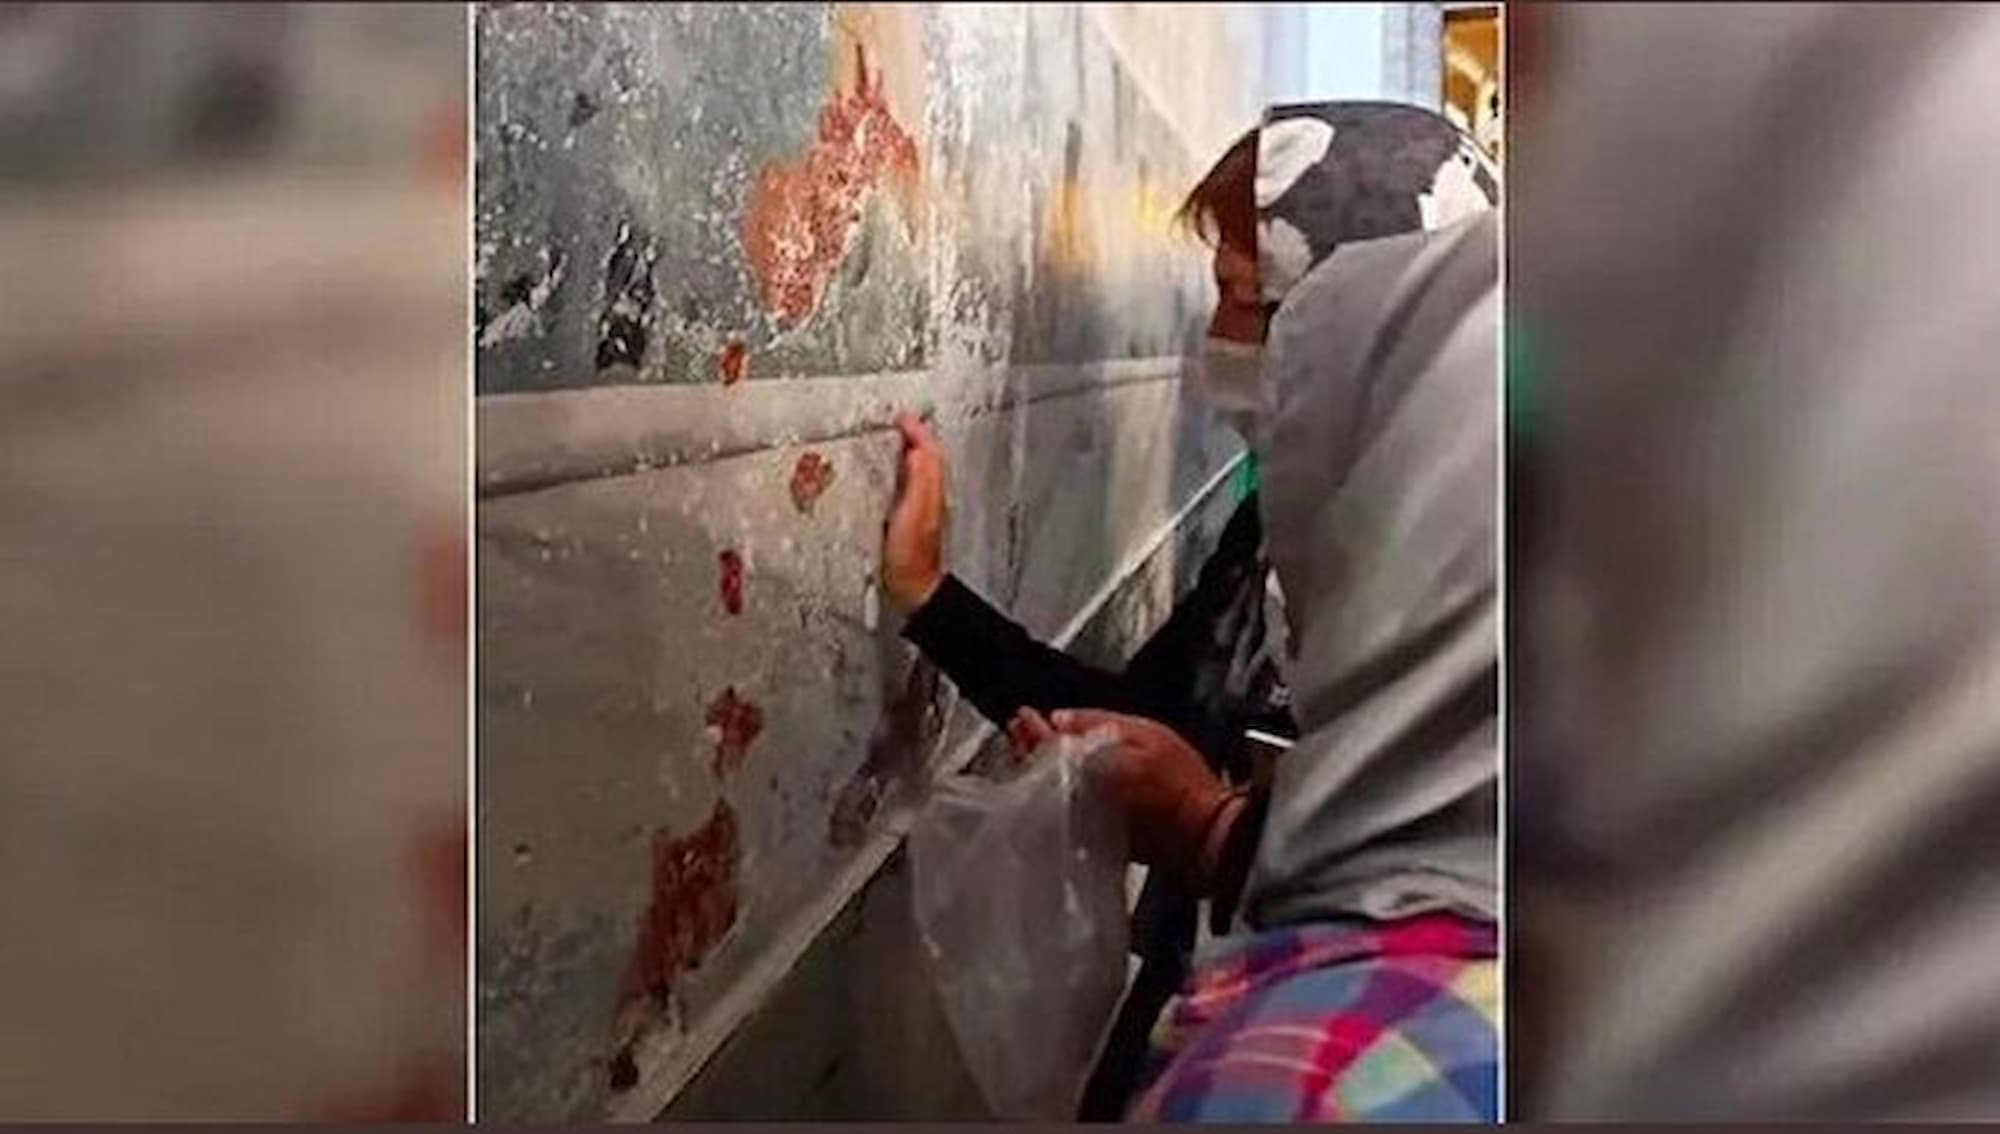 Agia sofia toixoi 25 5 22 - Αγία Σοφία: Τουρκικά ΜΜΕ κατηγορούν Χριστιανές τουρίστριες για τους βανδαλισμούς στους τοίχους (εικόνες)